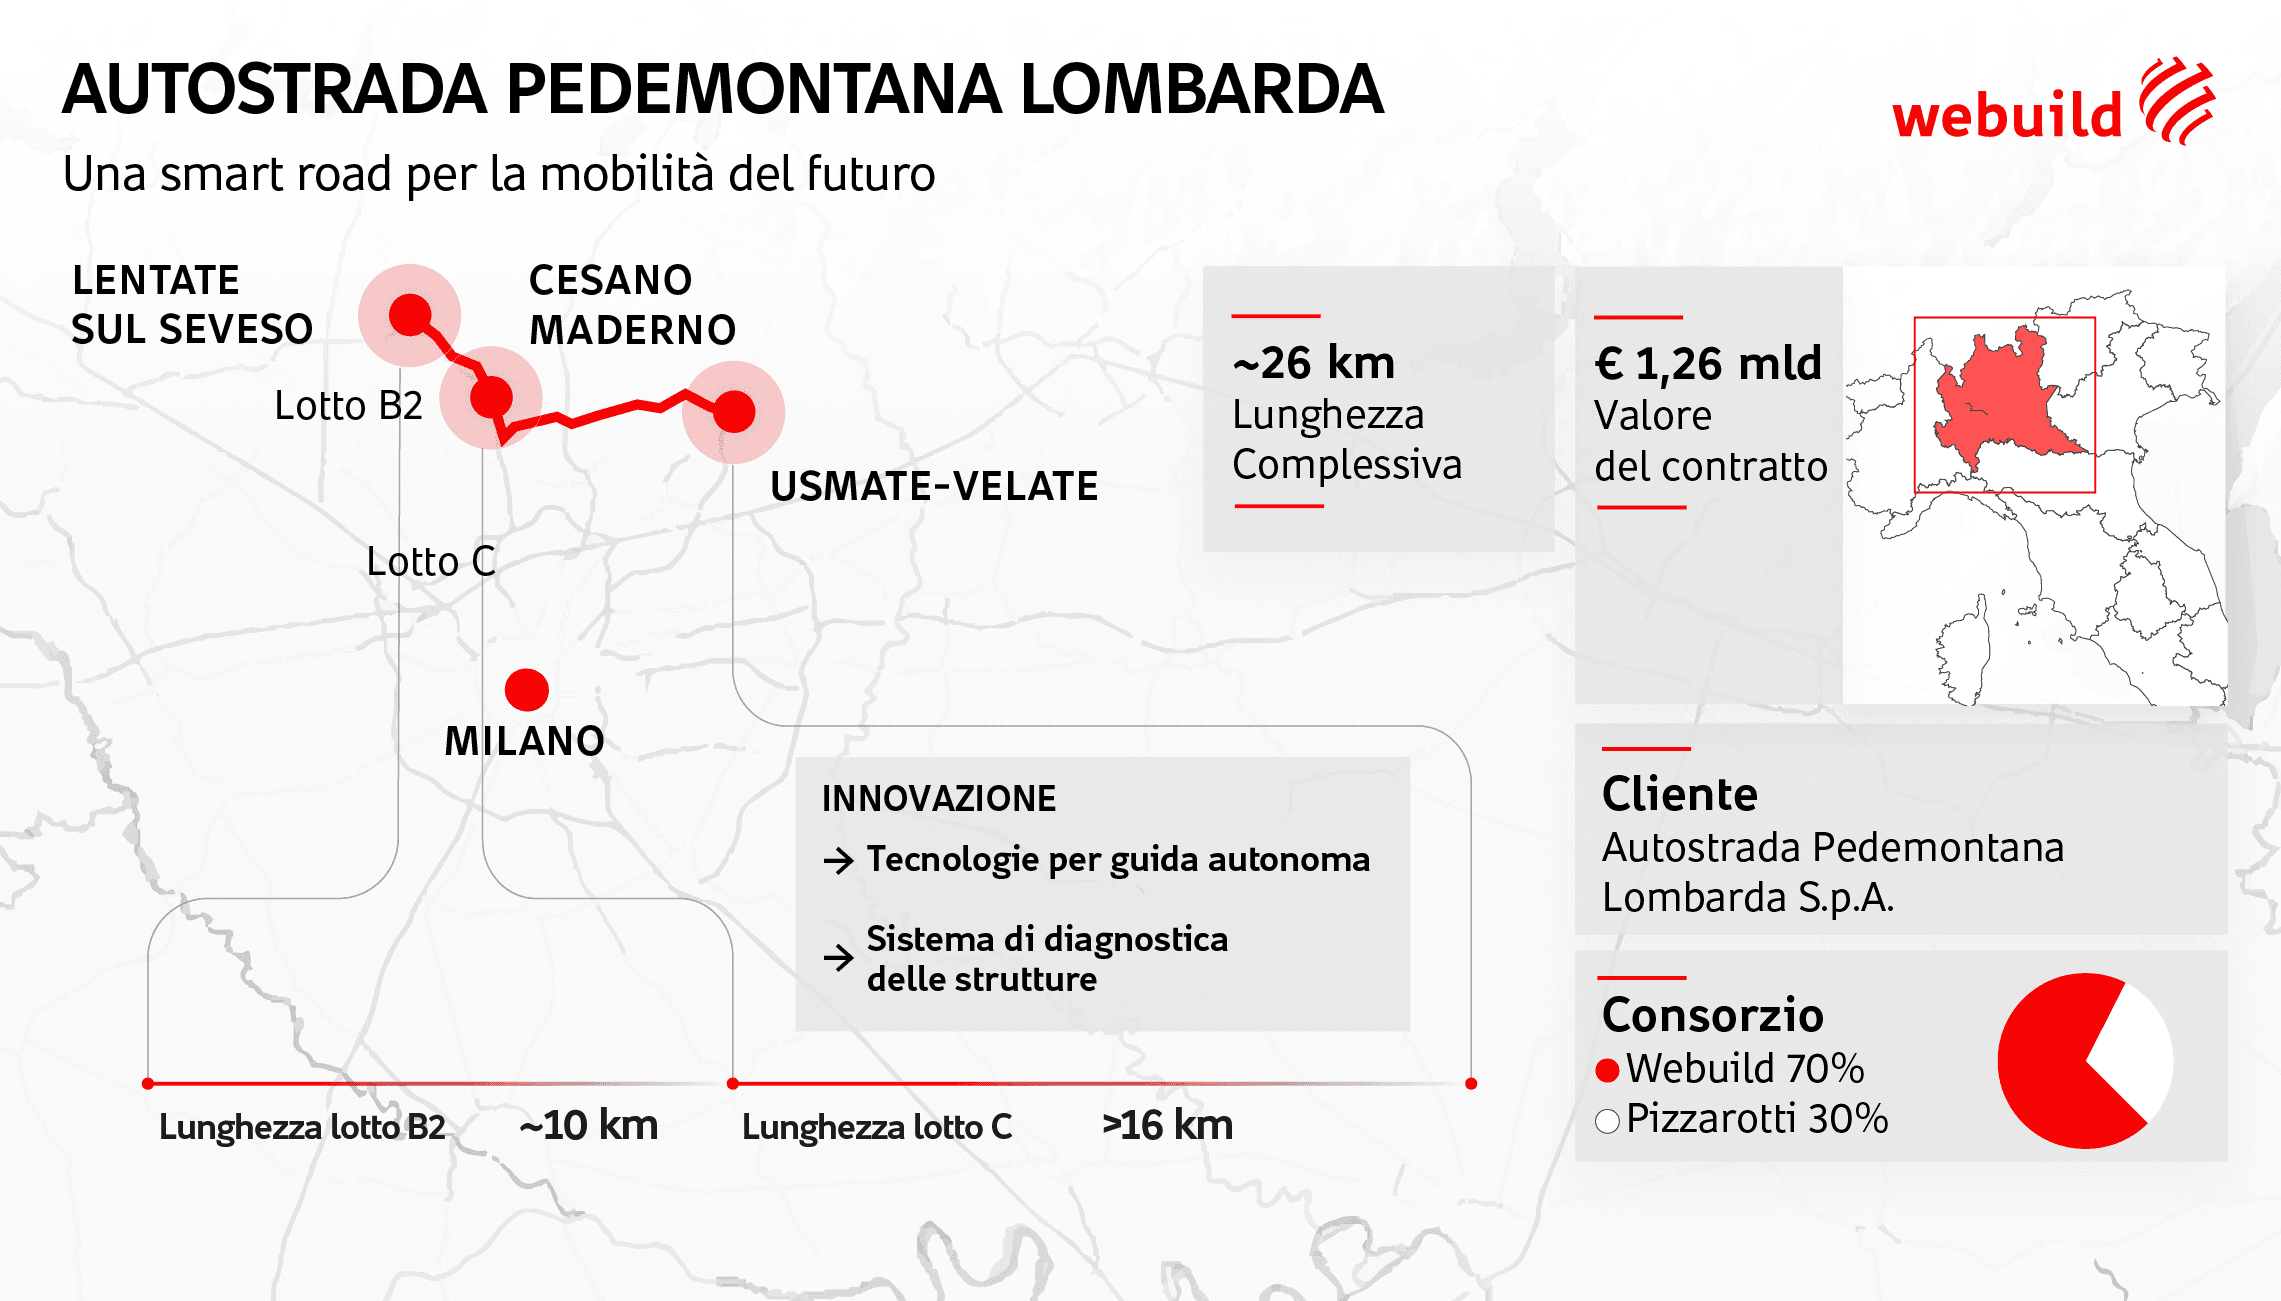 Autostrada Pedemontana Lombarda